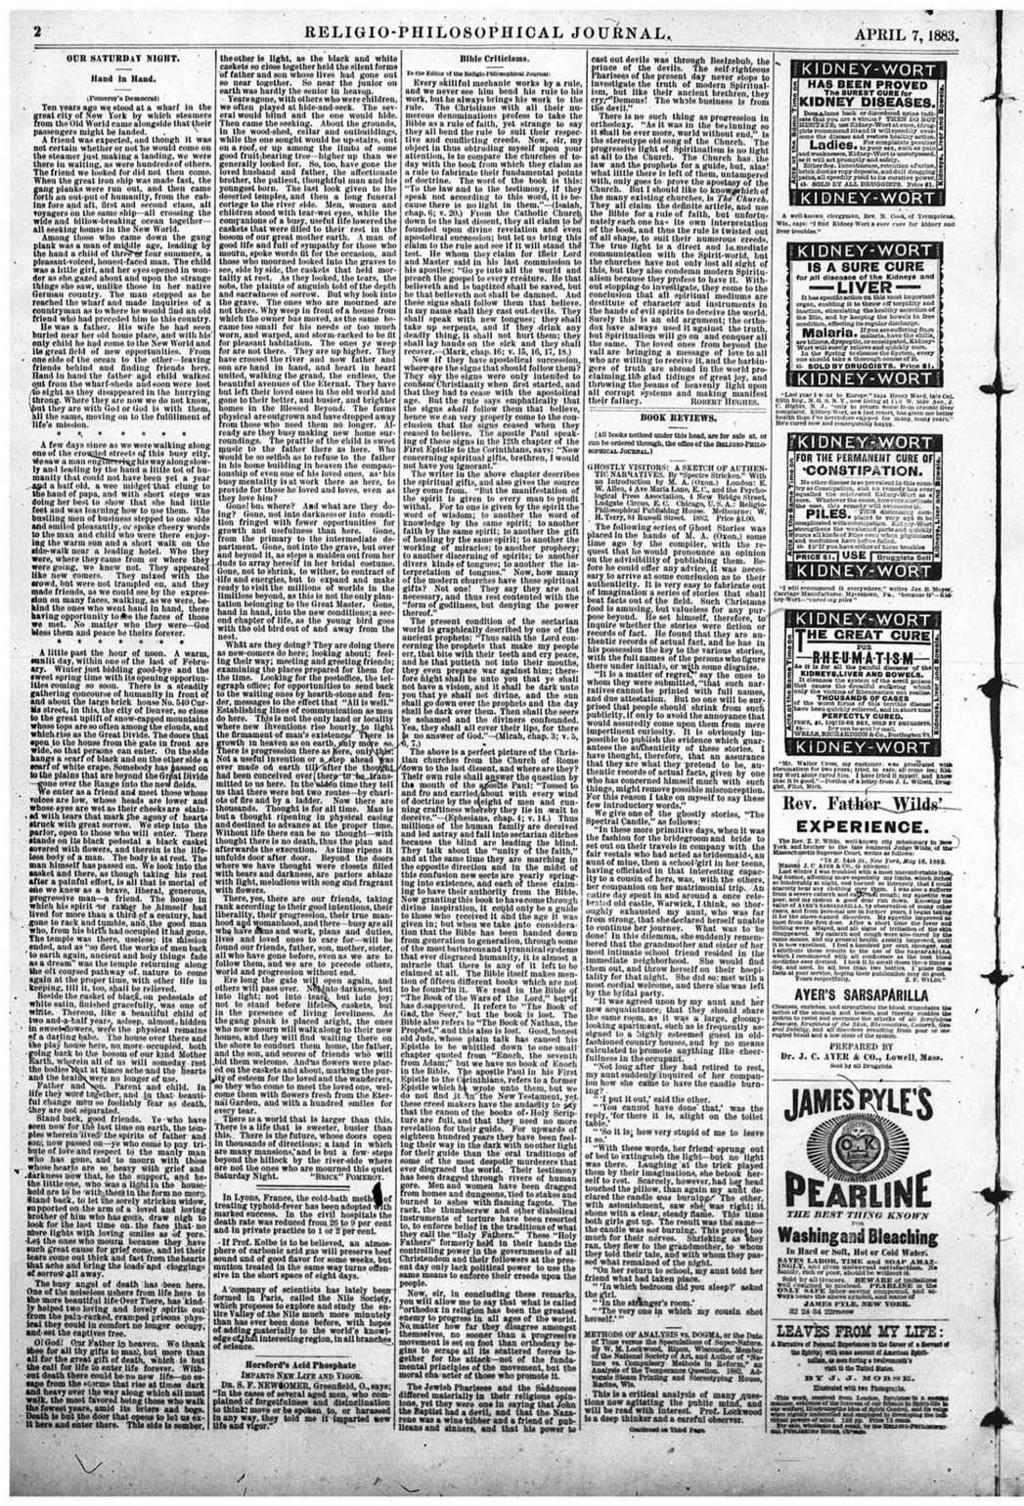 2 RELIGIO-PHILOSOPHICAL JOURNAL APRIL 7,1883. Ol!t SA T U B D.lT NK1IIT.